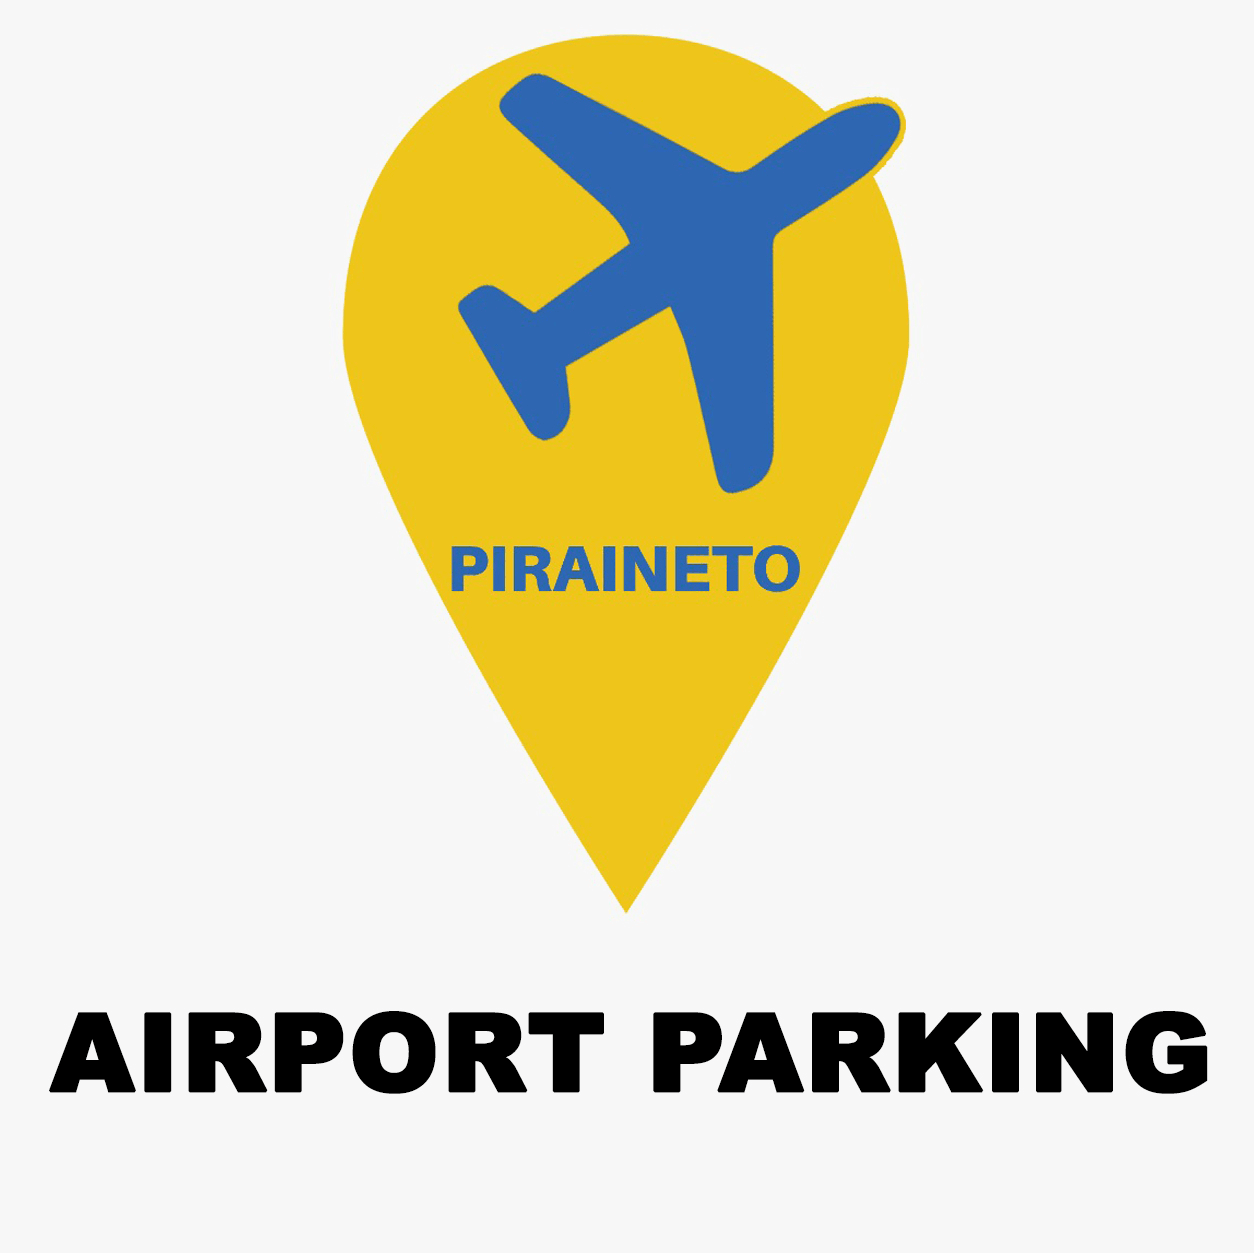 Piraineto Airport Parking At Palermo Airport